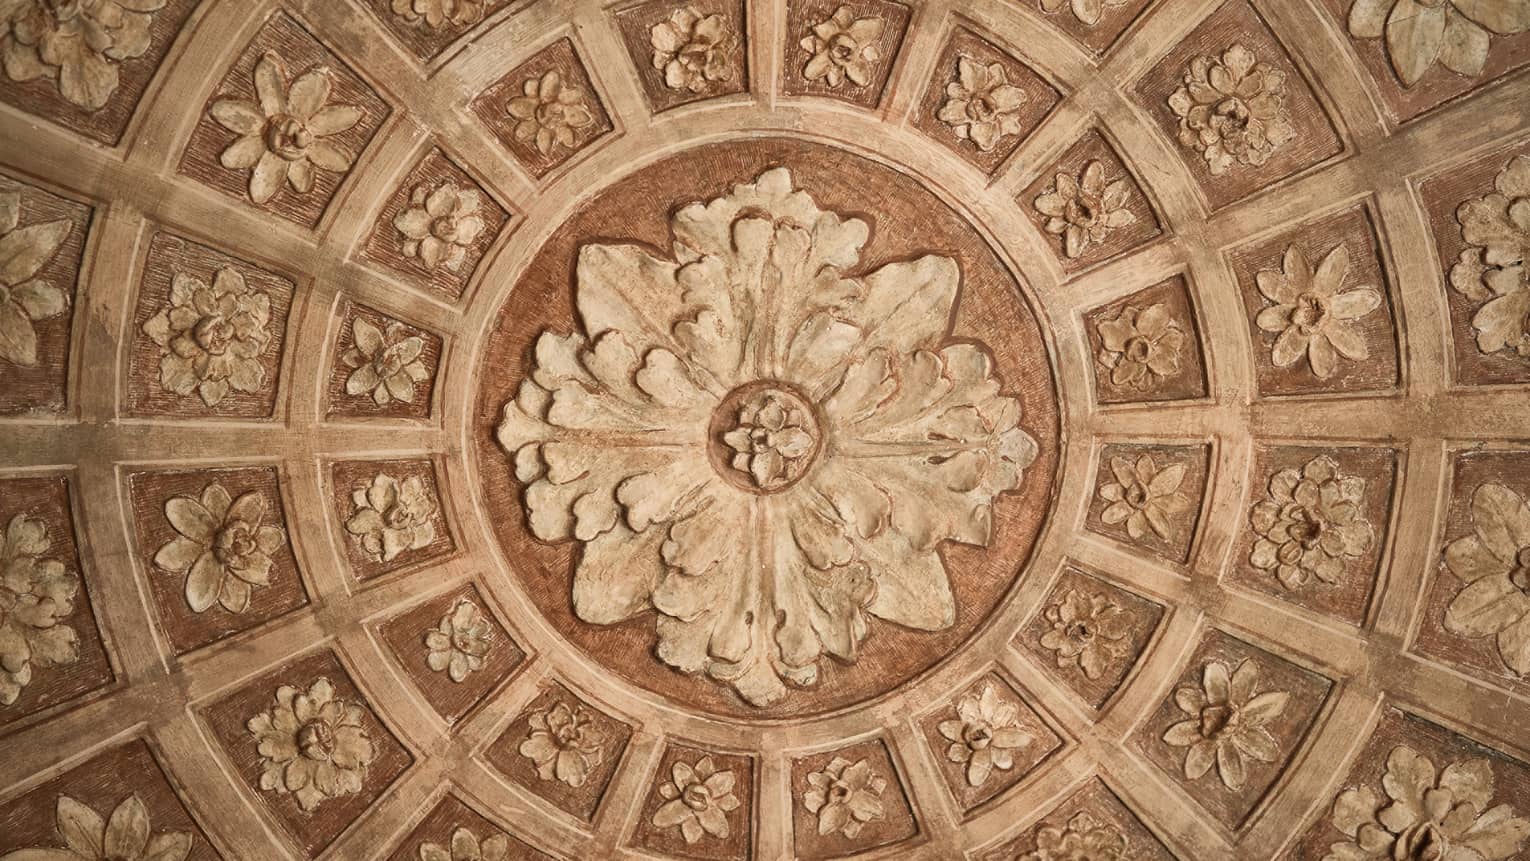 Fresco ceiling detail